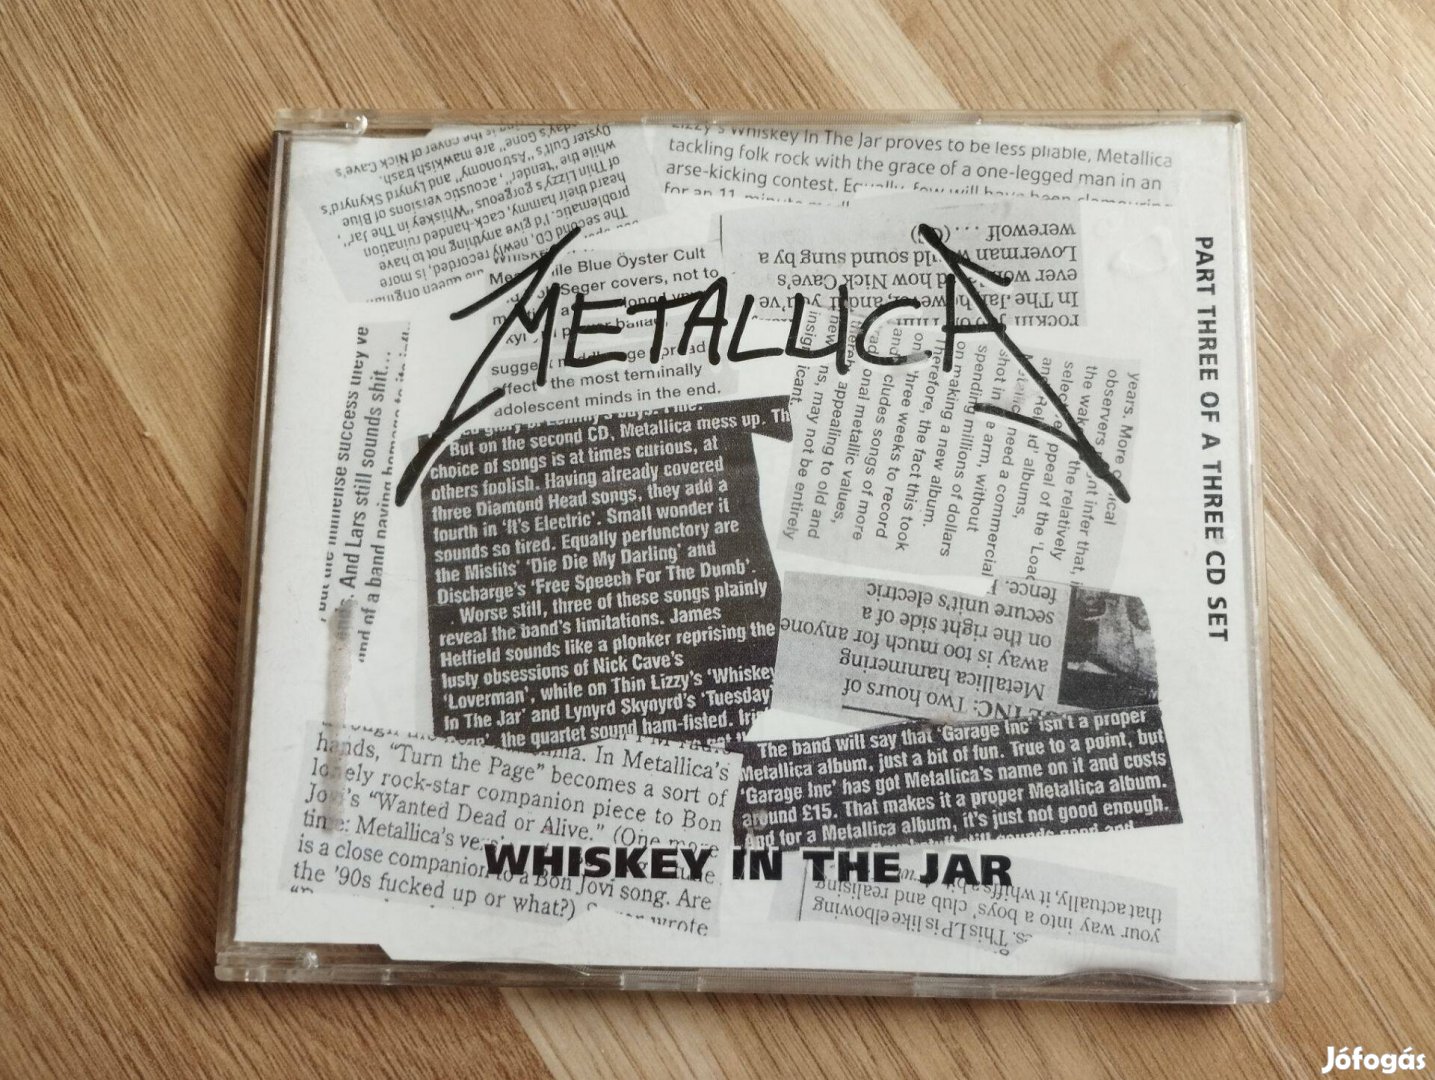 Metallica -Whiskey in the jar cd